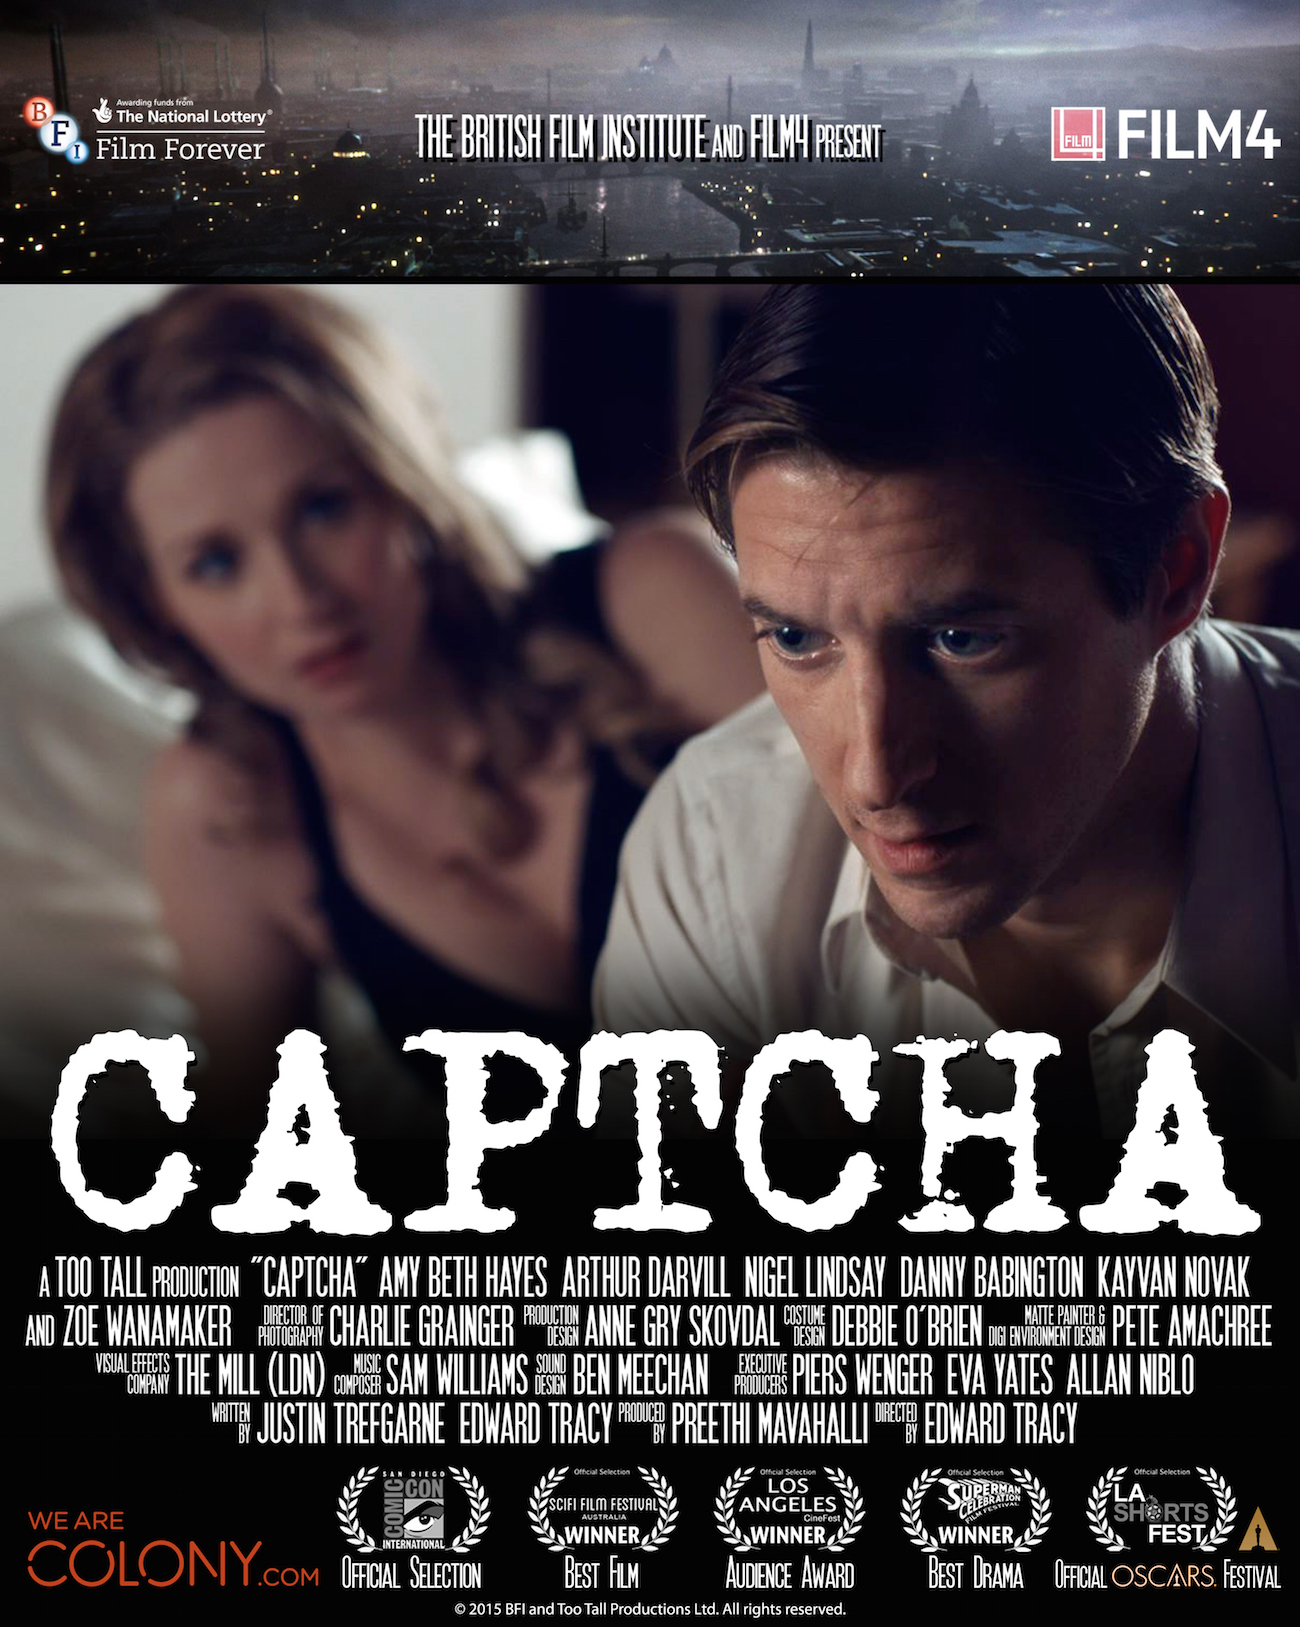 Captcha (2014) постер